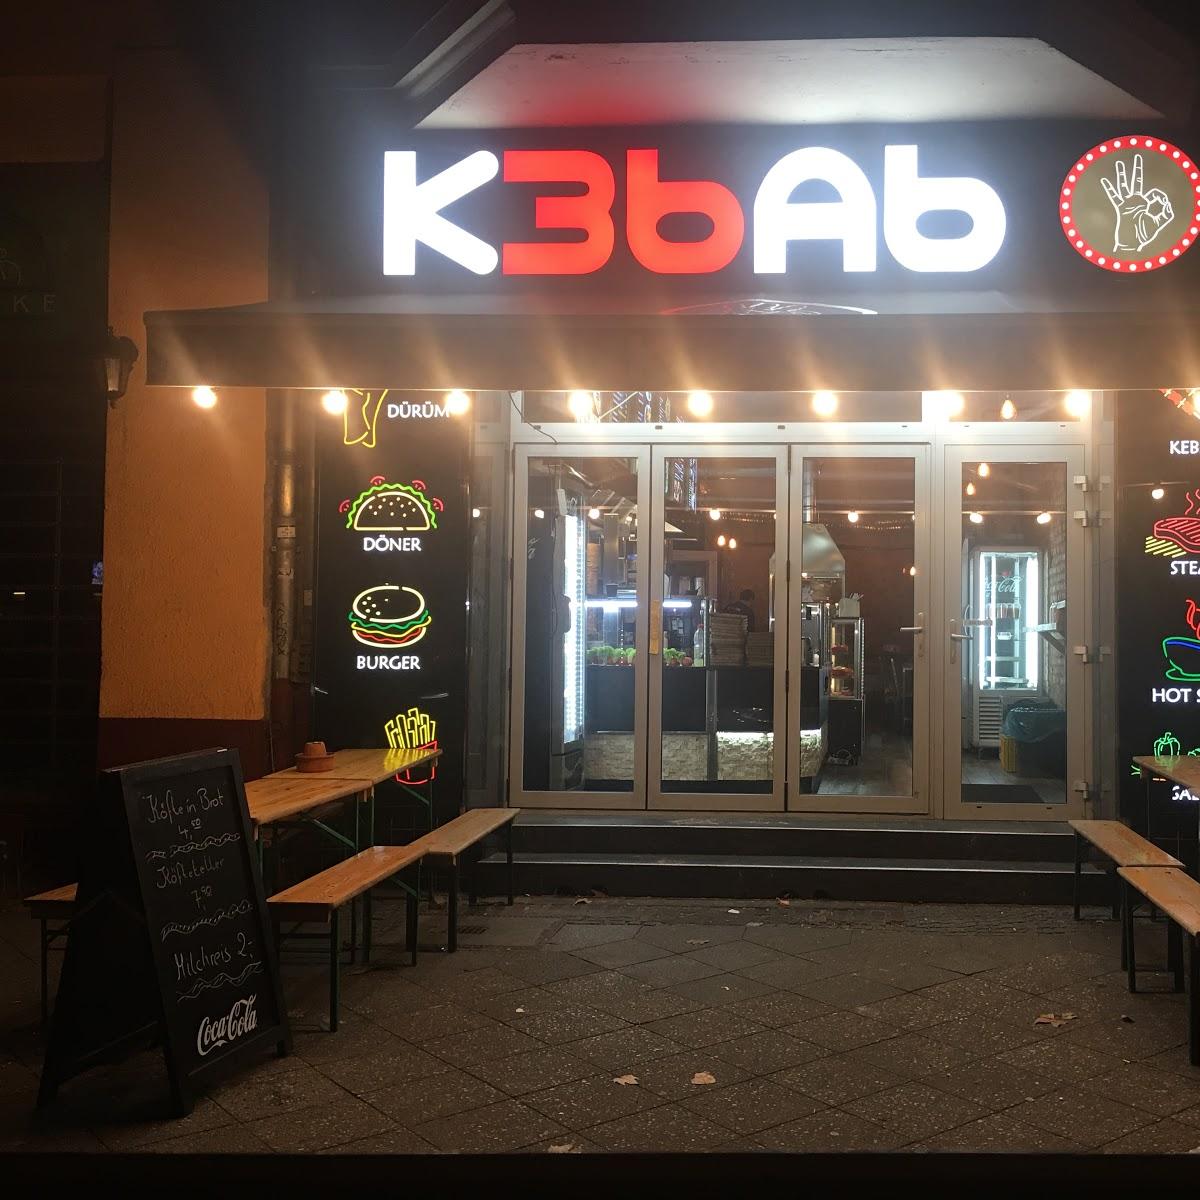 Restaurant "Kebab36 Berlin" in Berlin